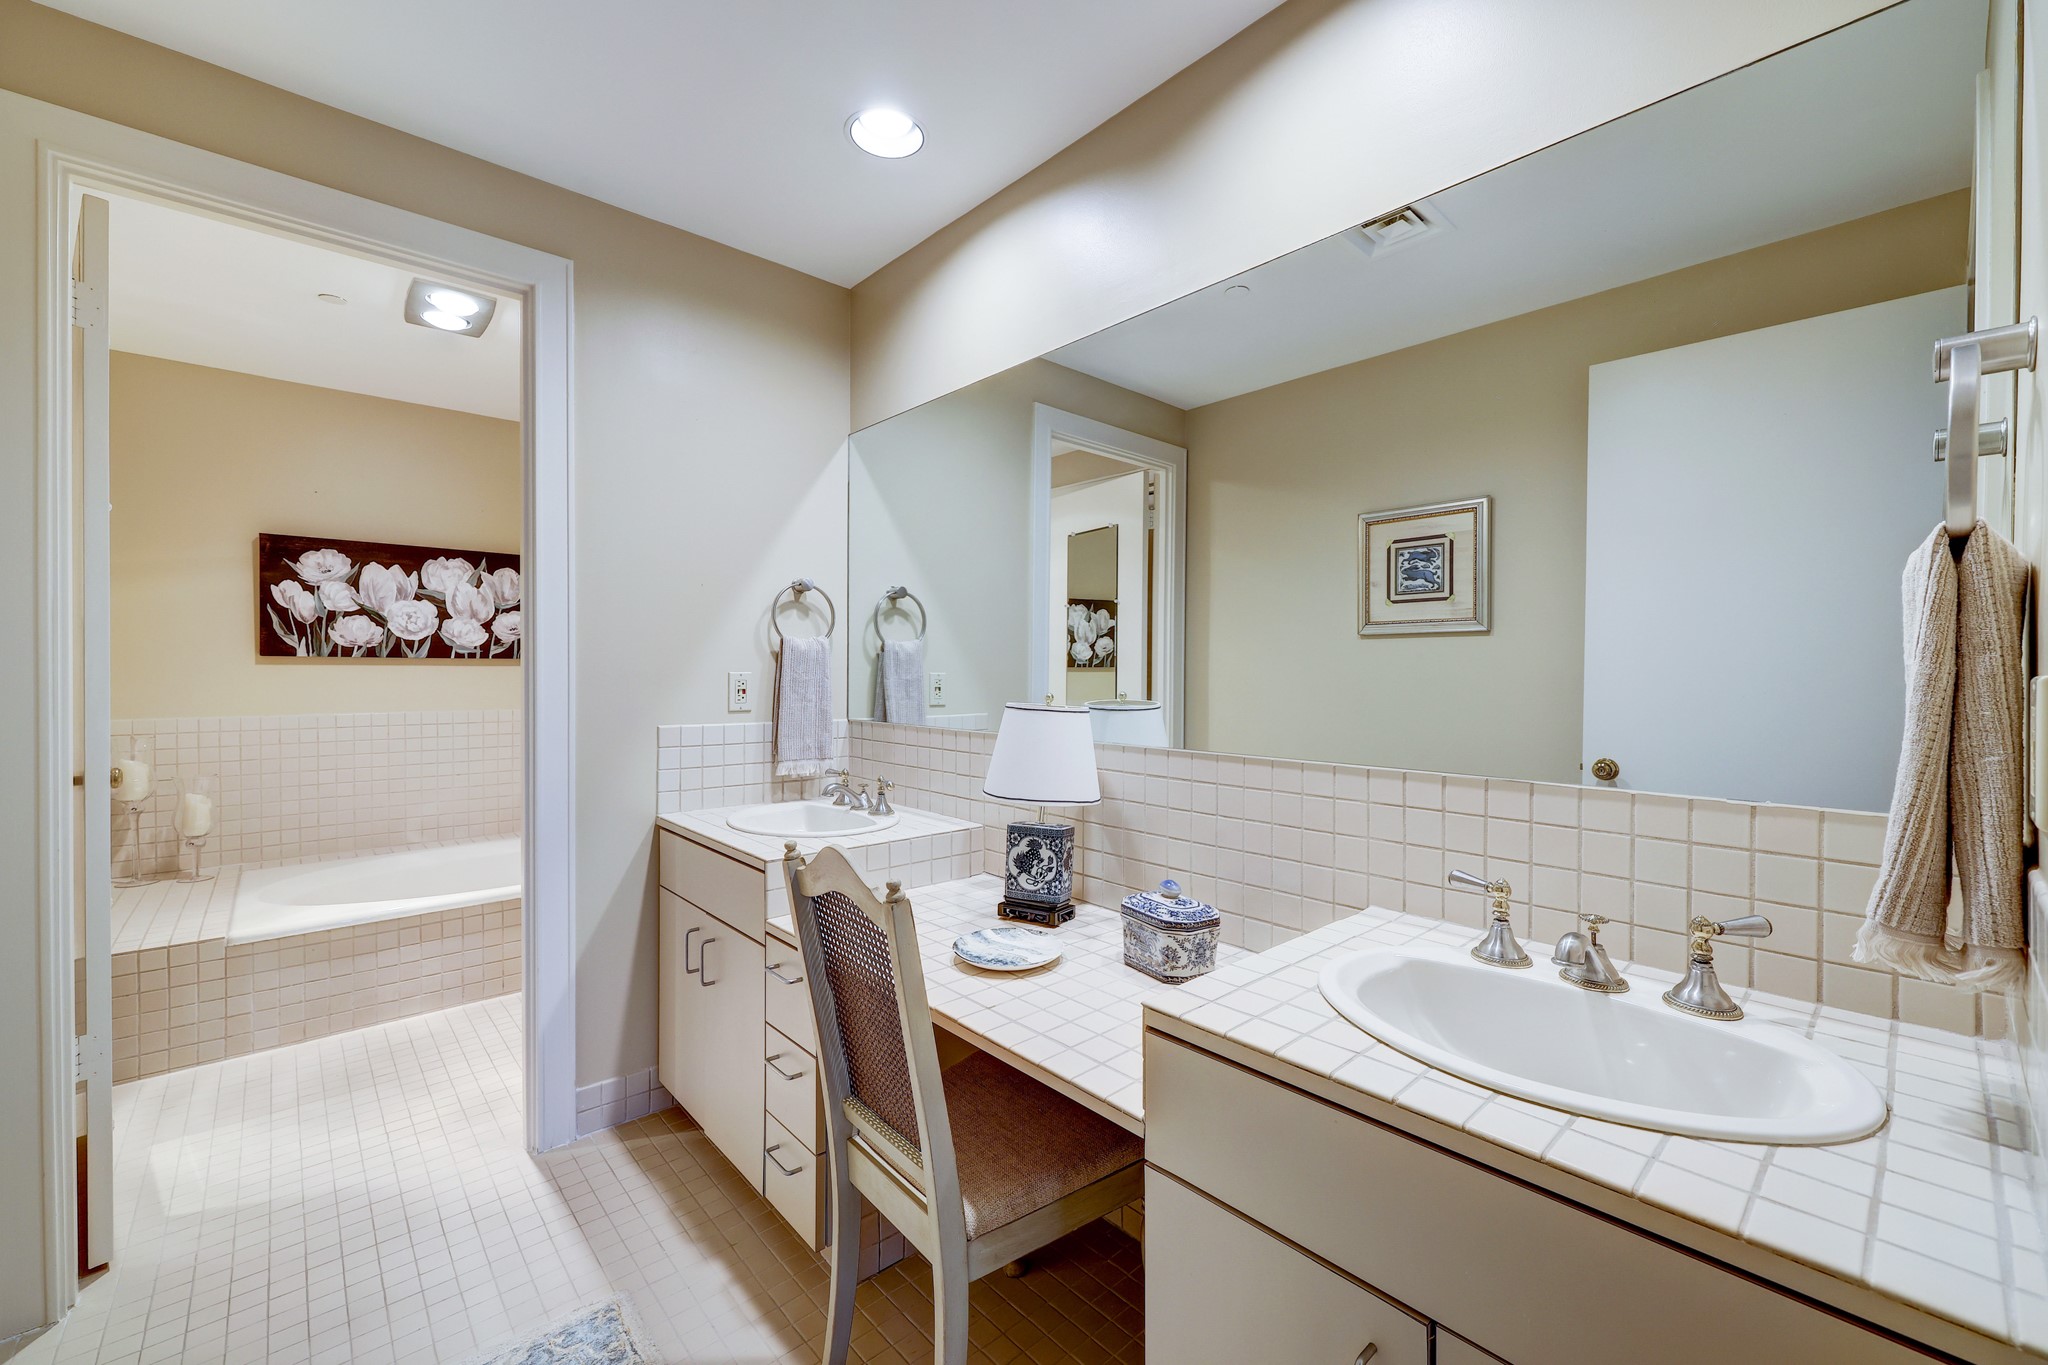 Ensuite bathroom in third bedroom includes double sinks, garden tub and linen closet